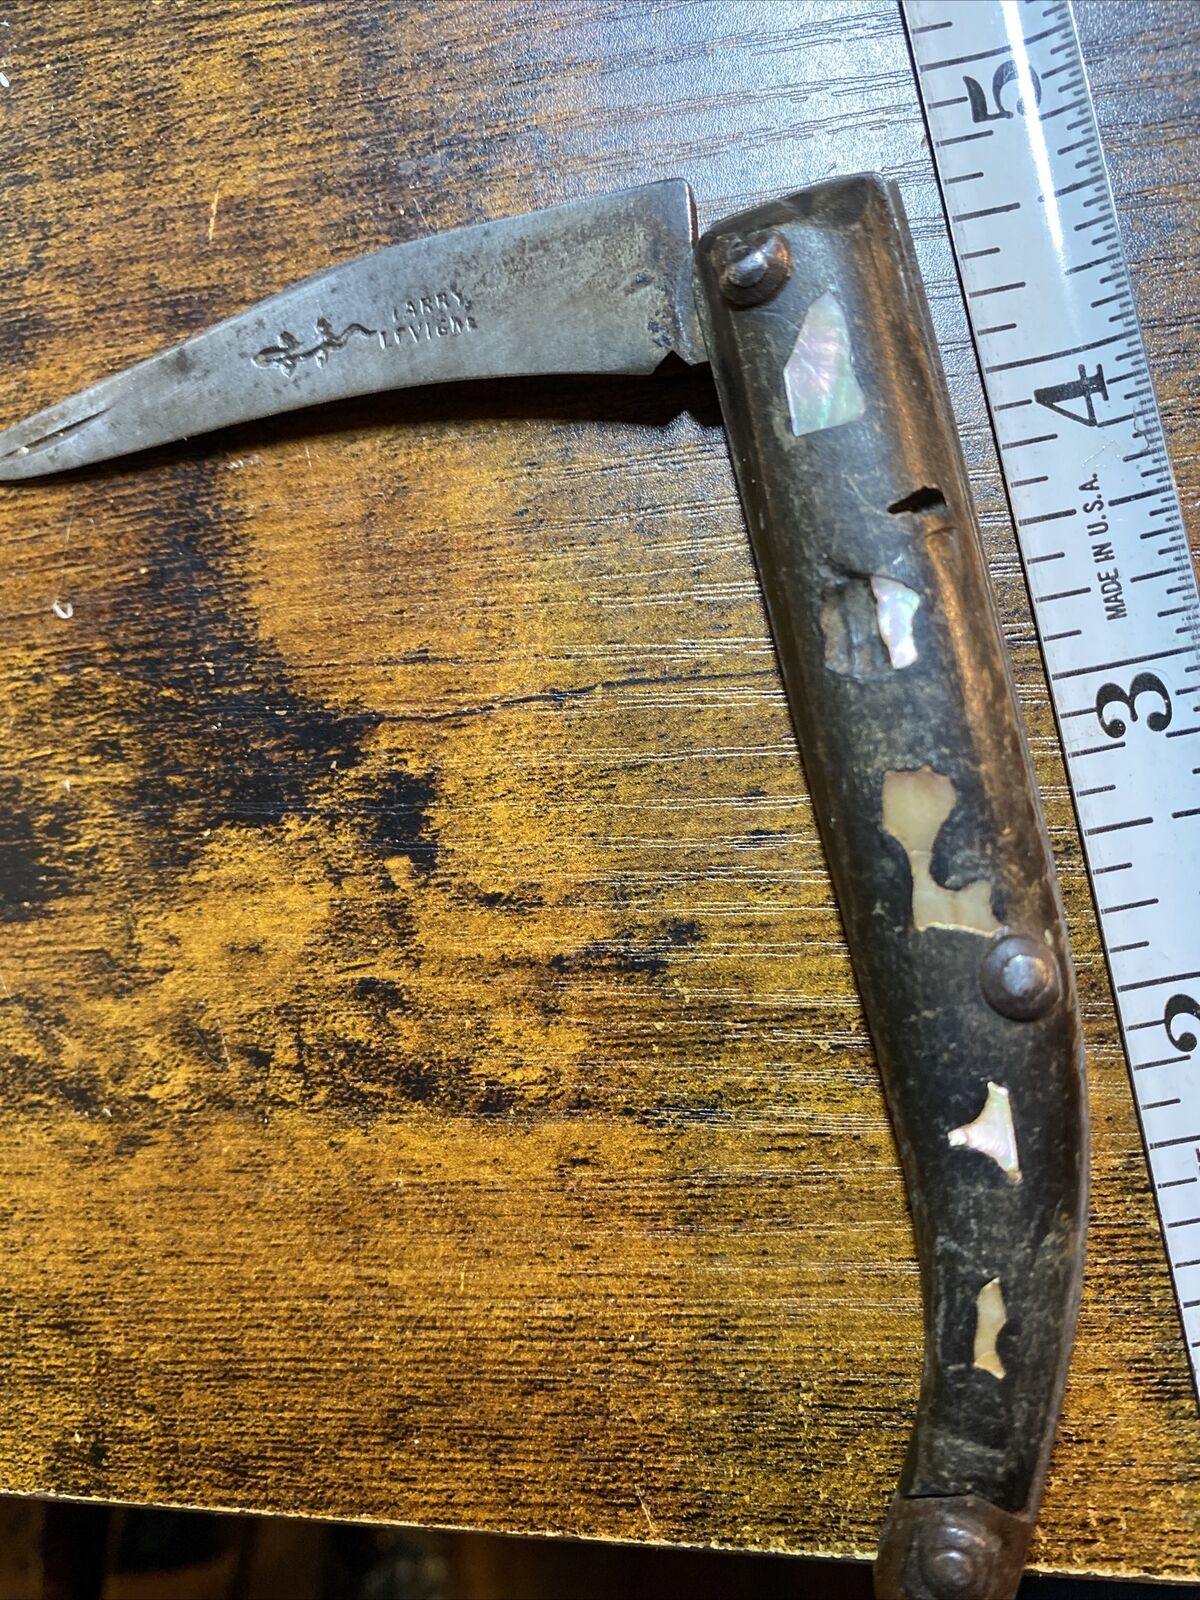 Antique TARRY LEVIGNE DEPOSE French Stiletto Folding Pocket Knife